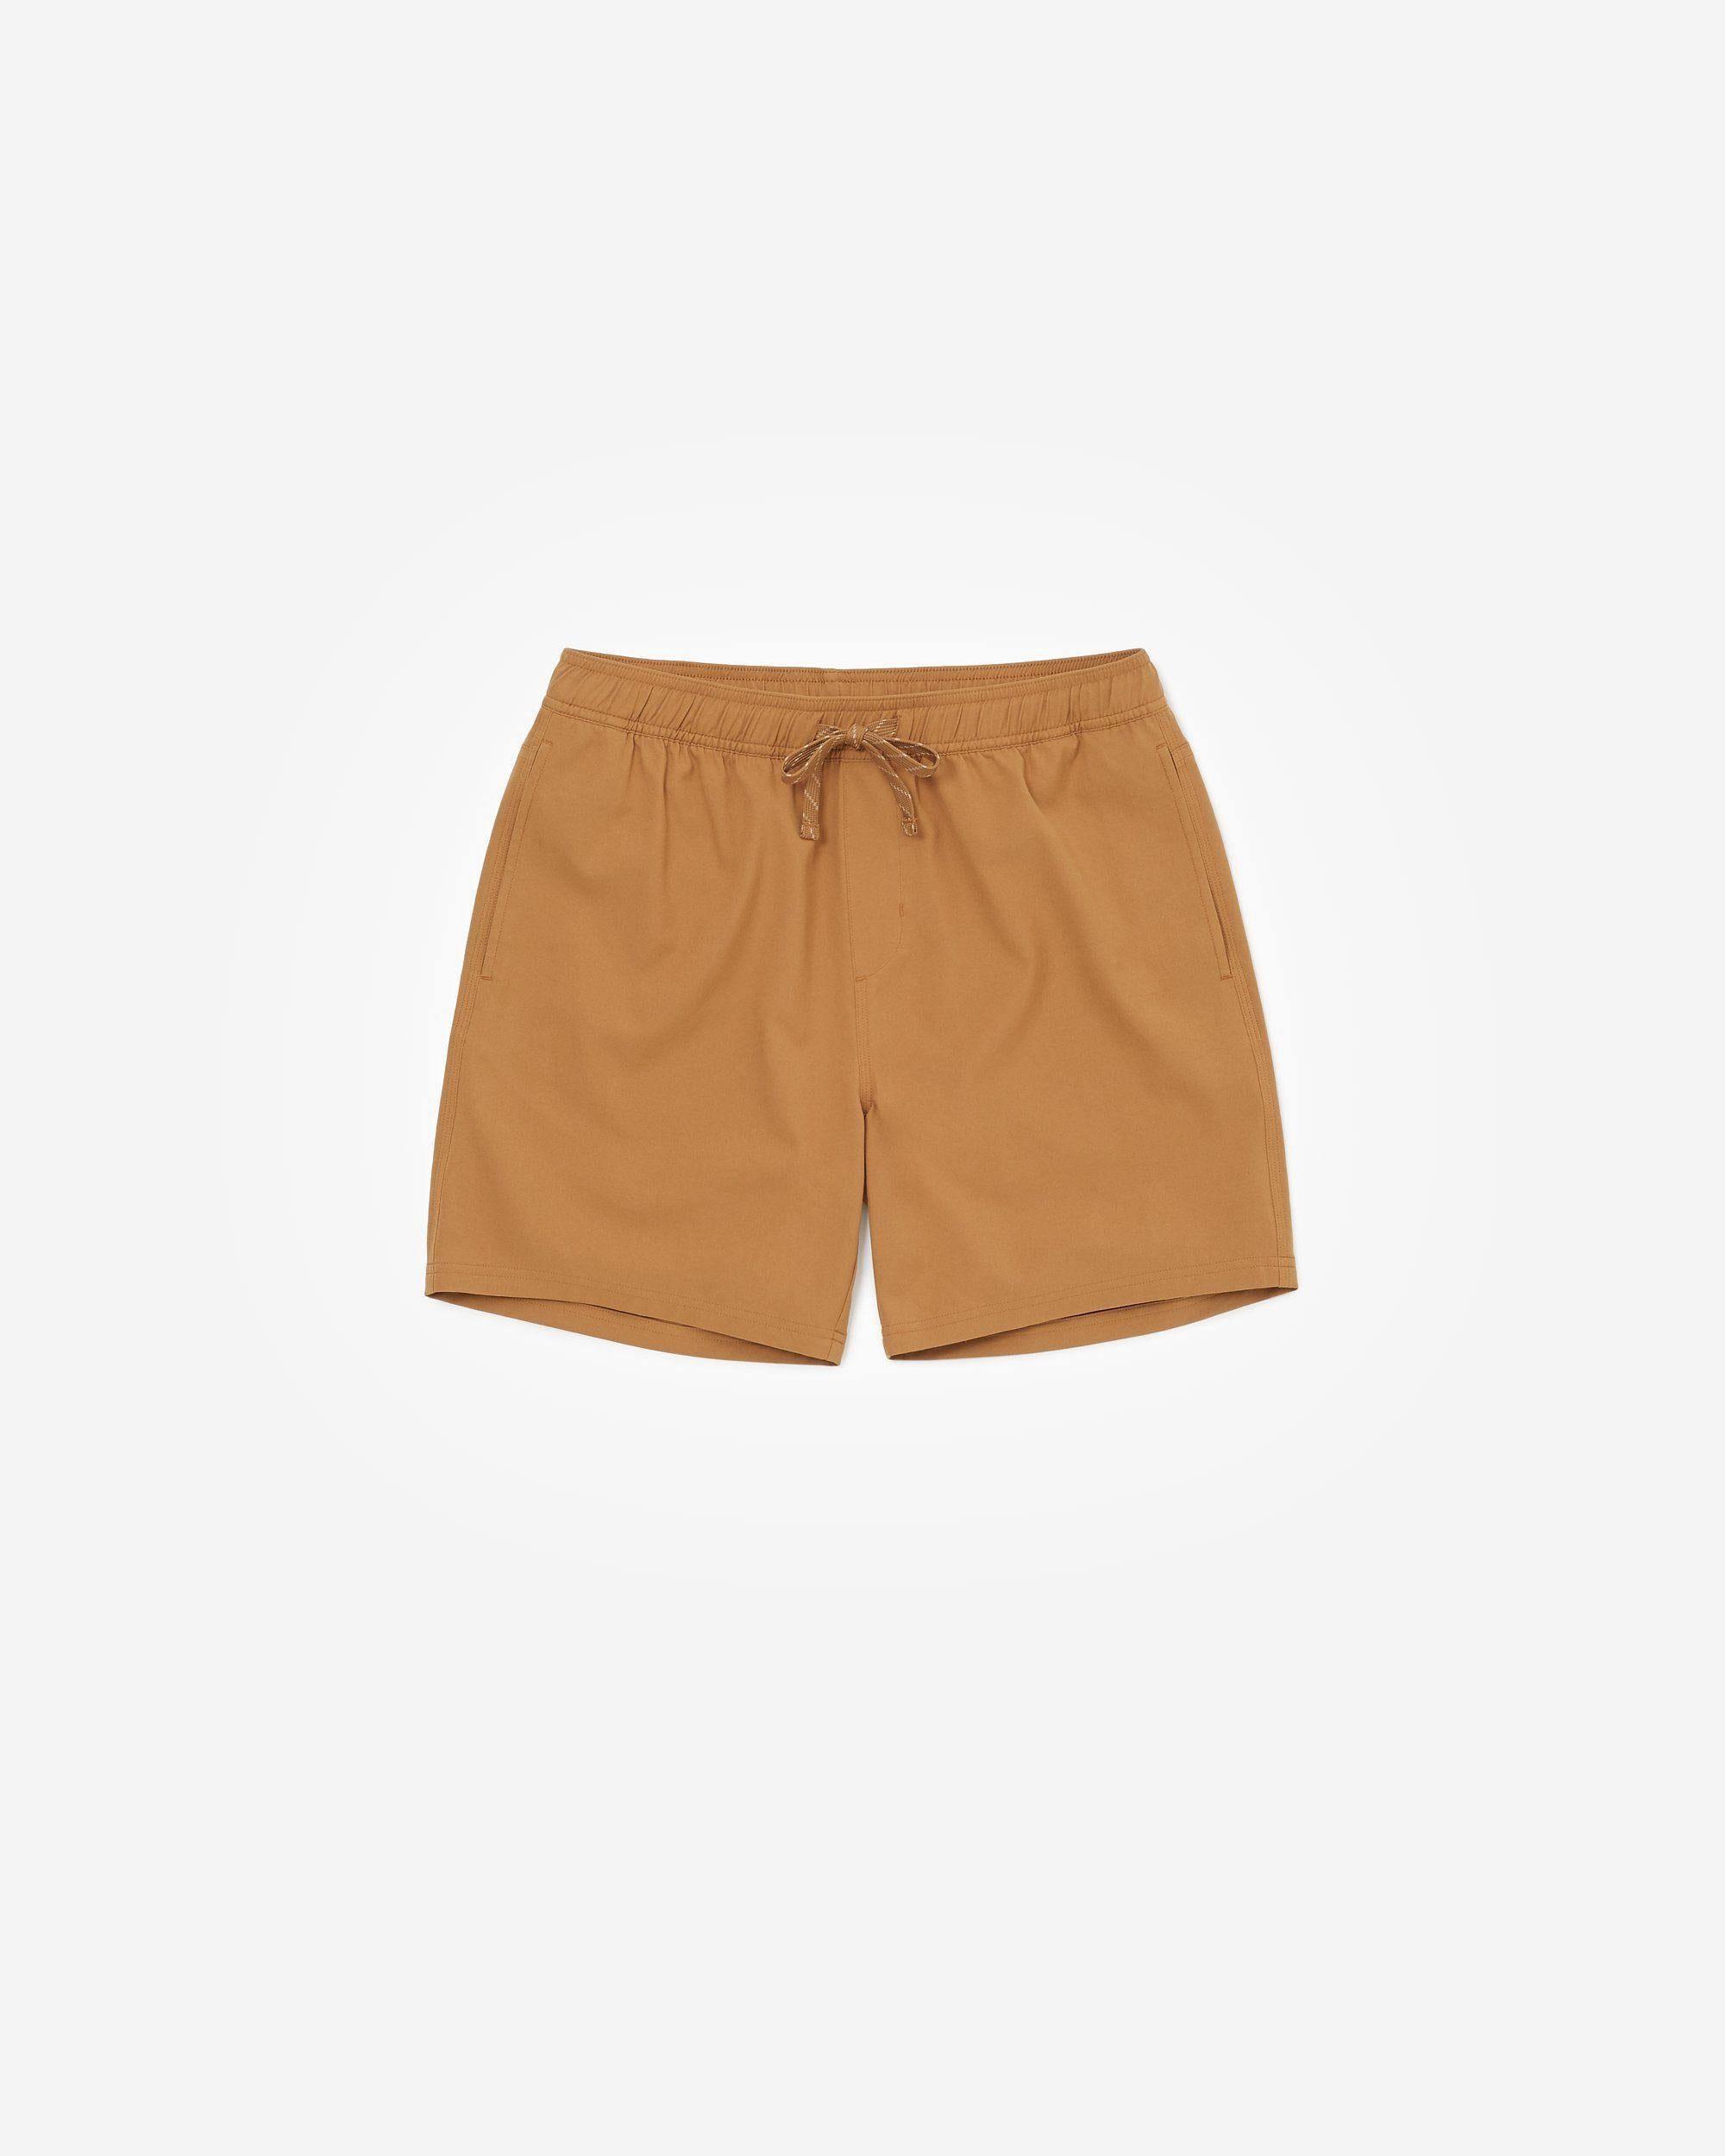 M's Shoreline Boardshorts 17" Shorts Seadon Activewear Outdoor Travel Shirts